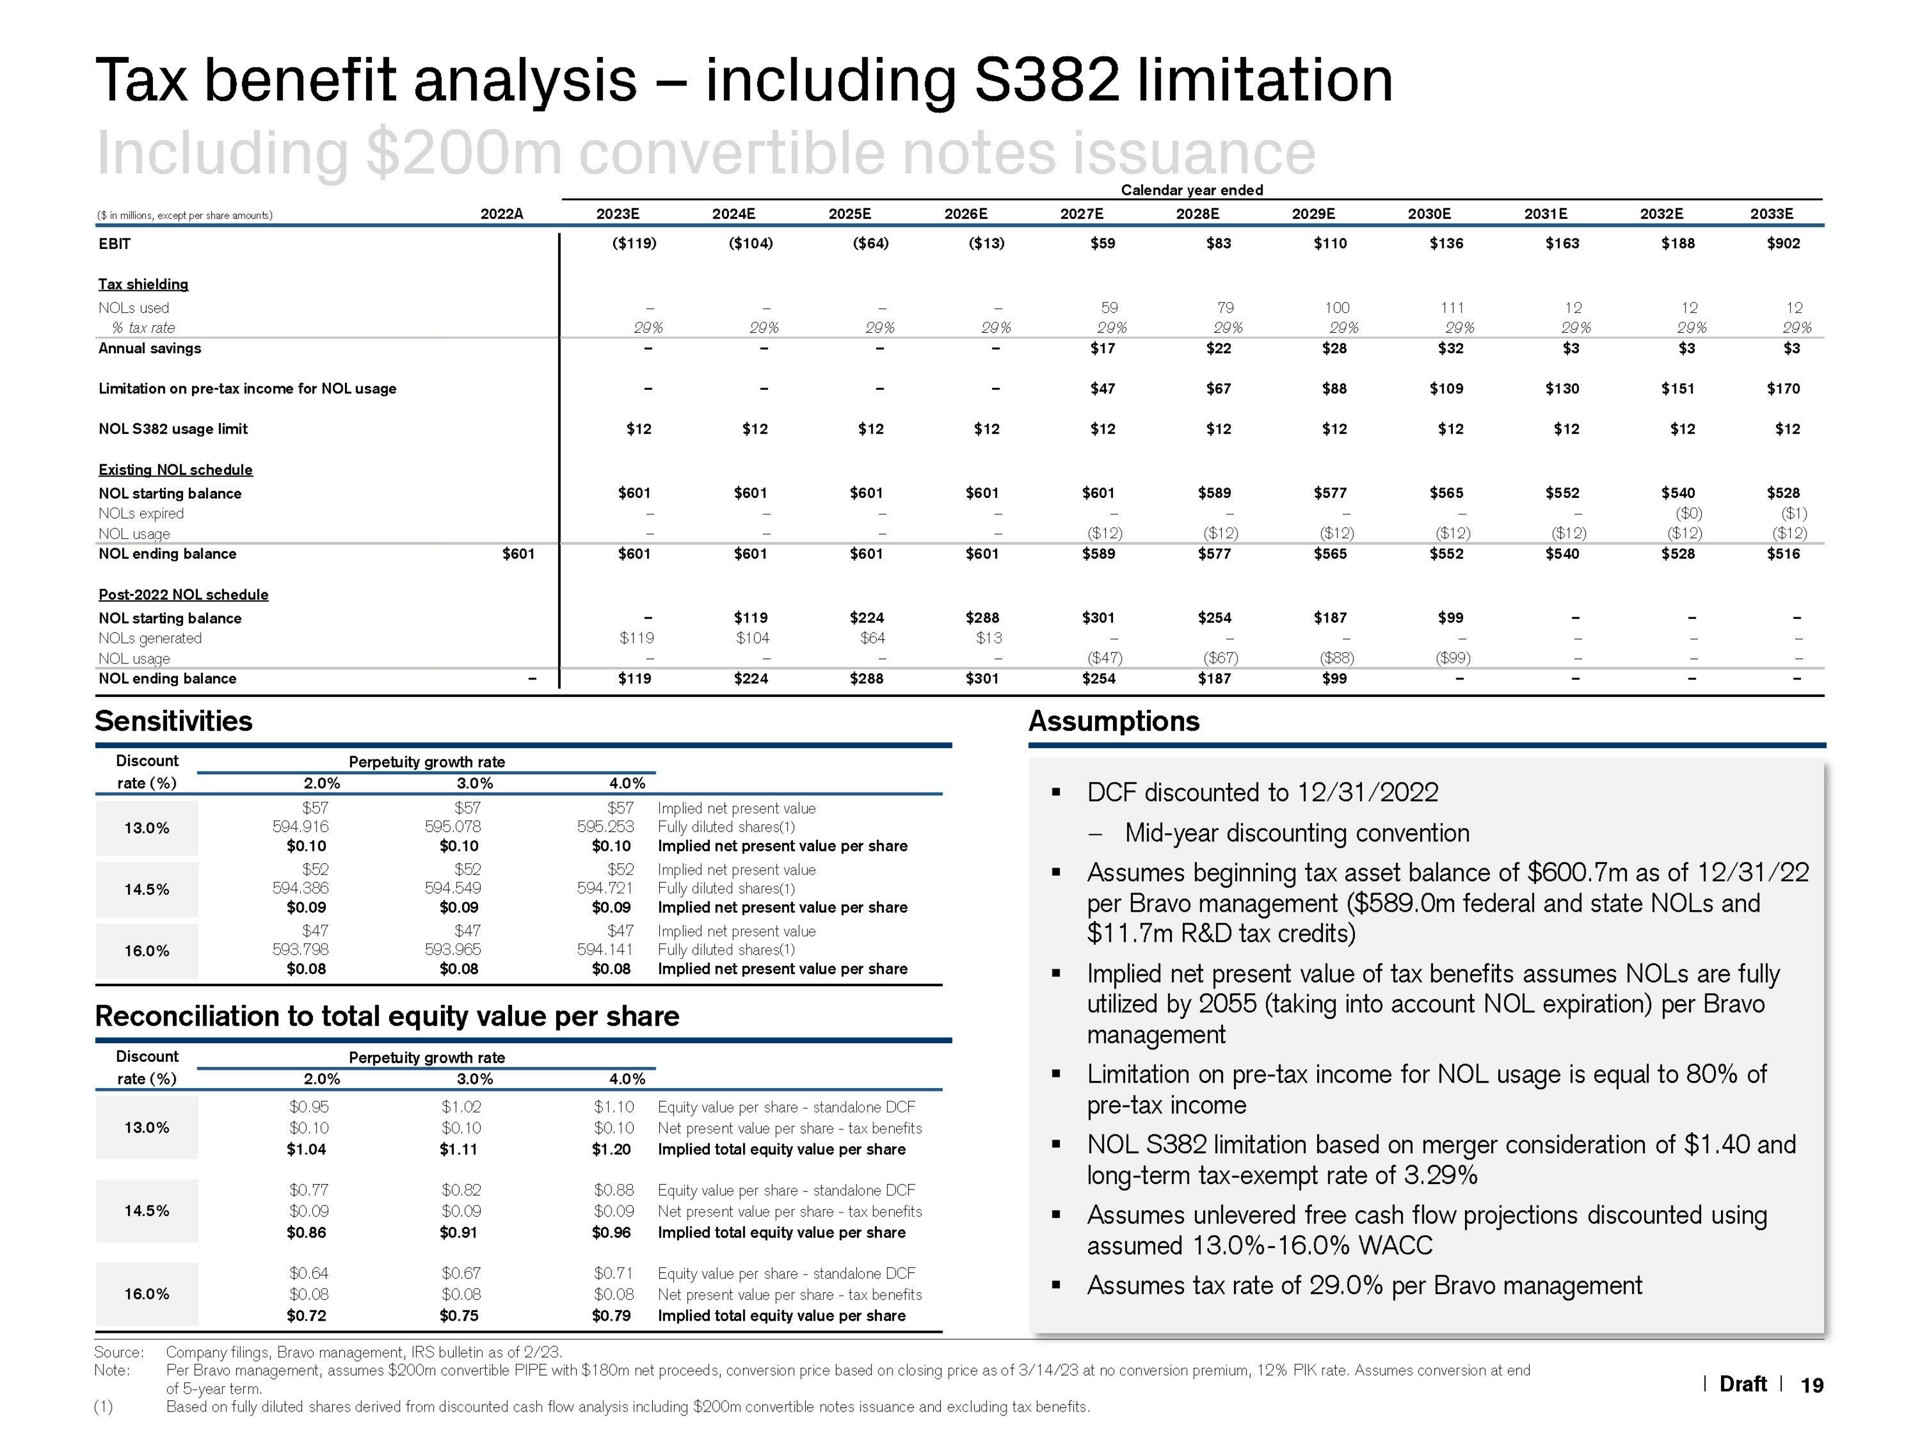 tax benefit analysis including limitation sensitivities assumed | Credit Suisse